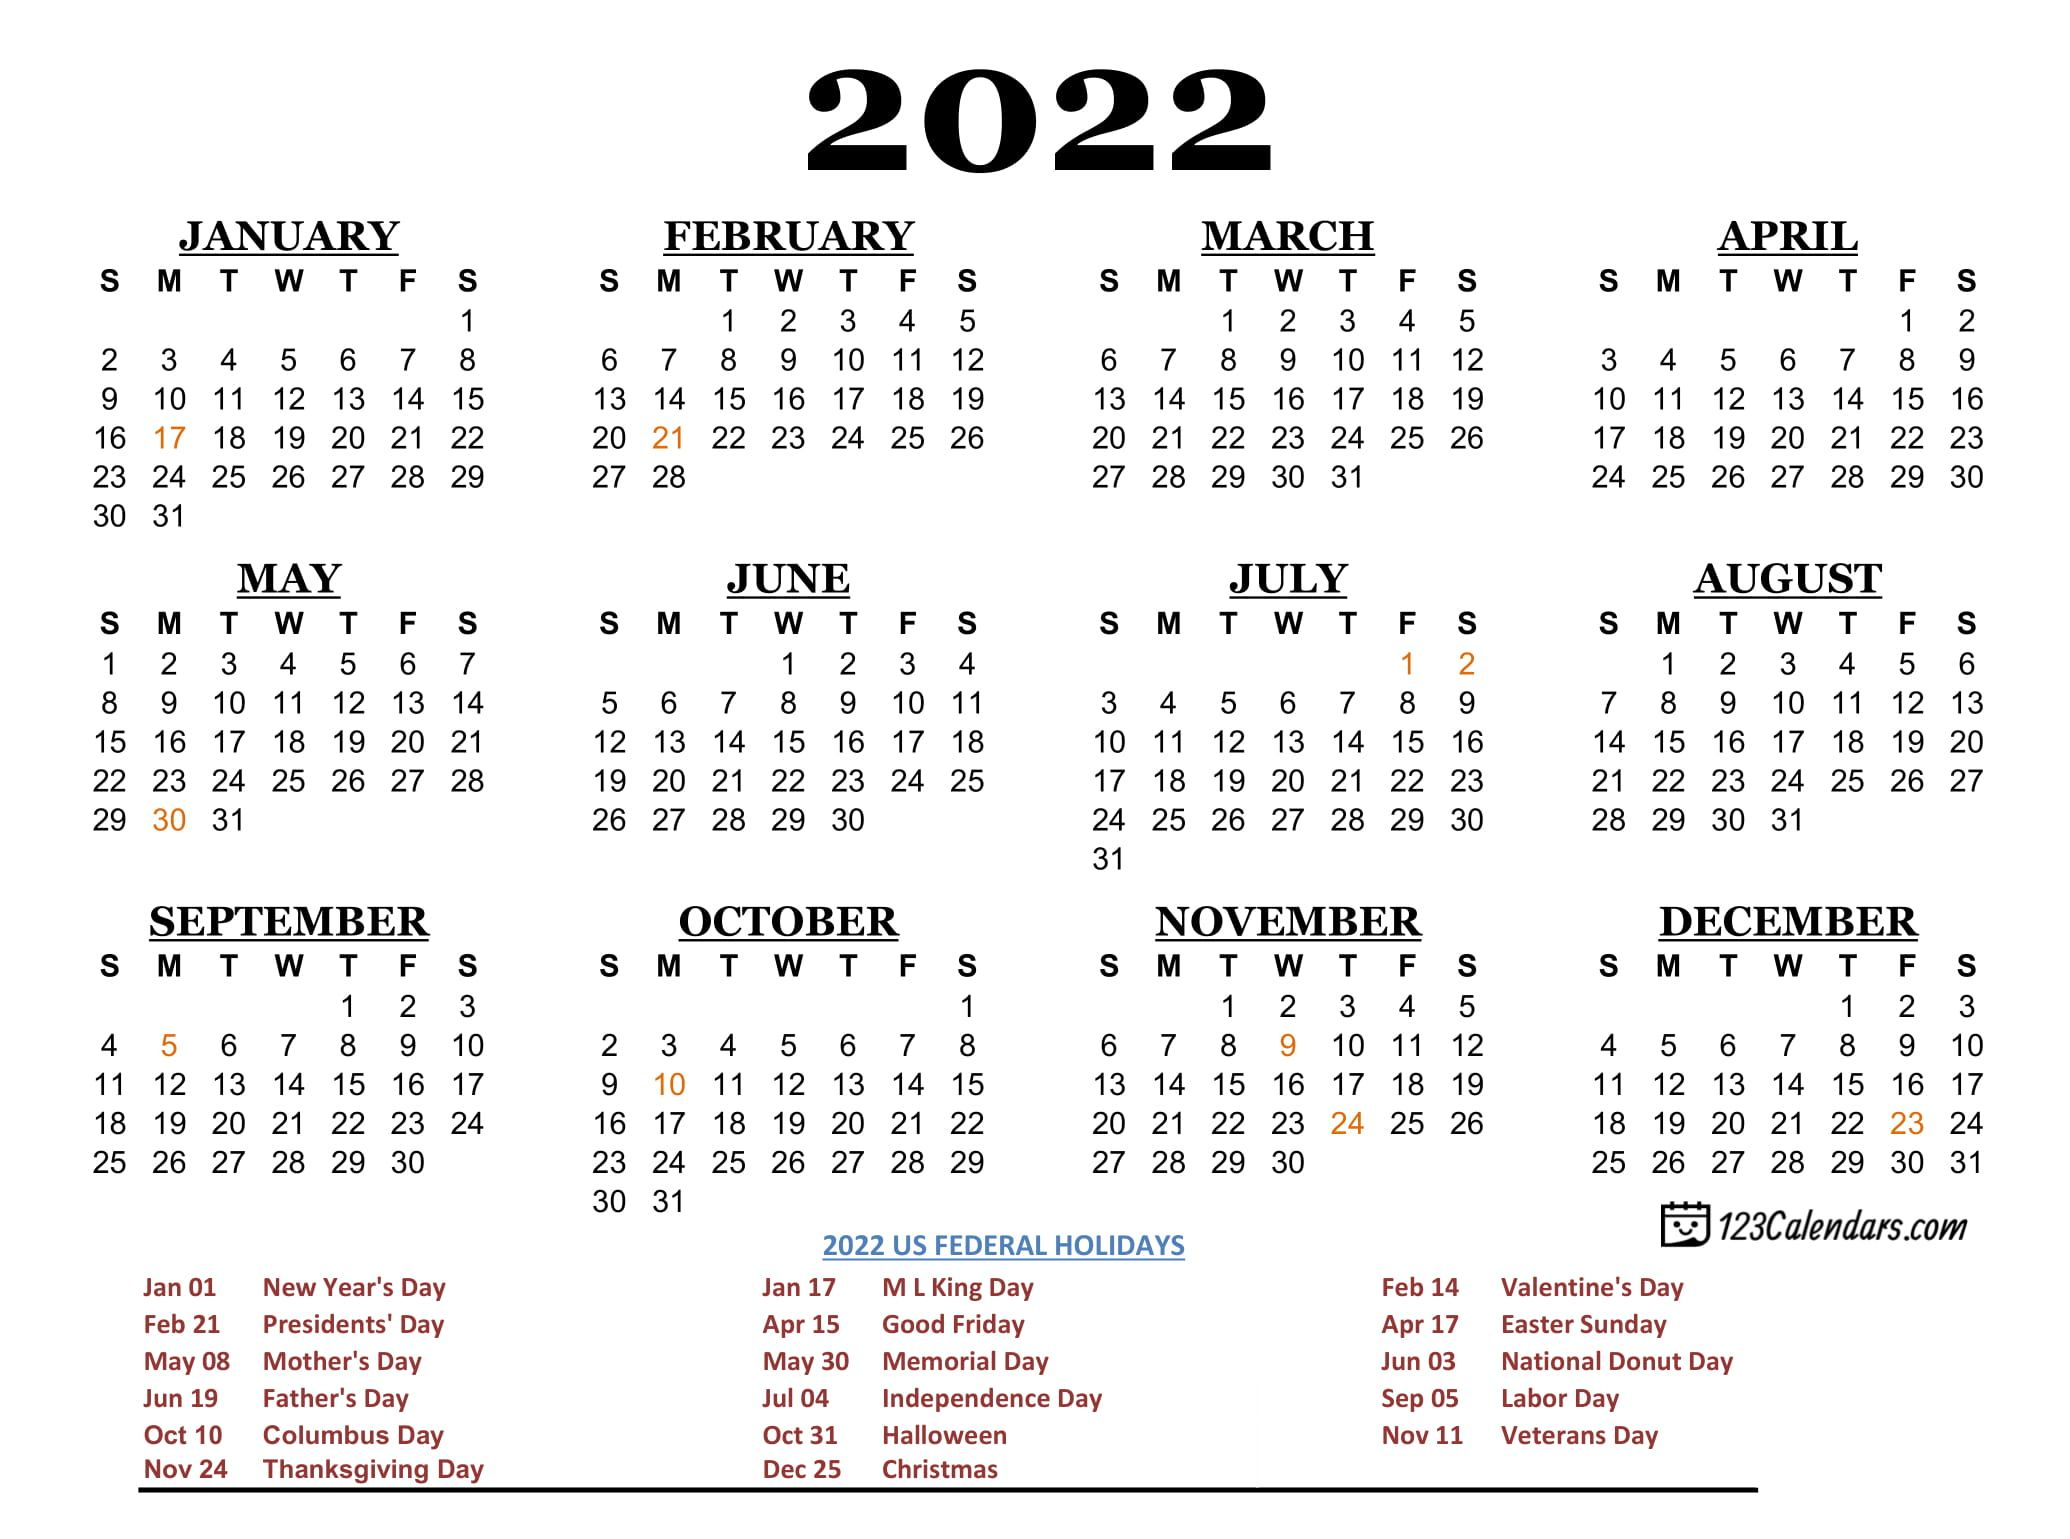 Year 2022 Calendar Templates | 123Calendars